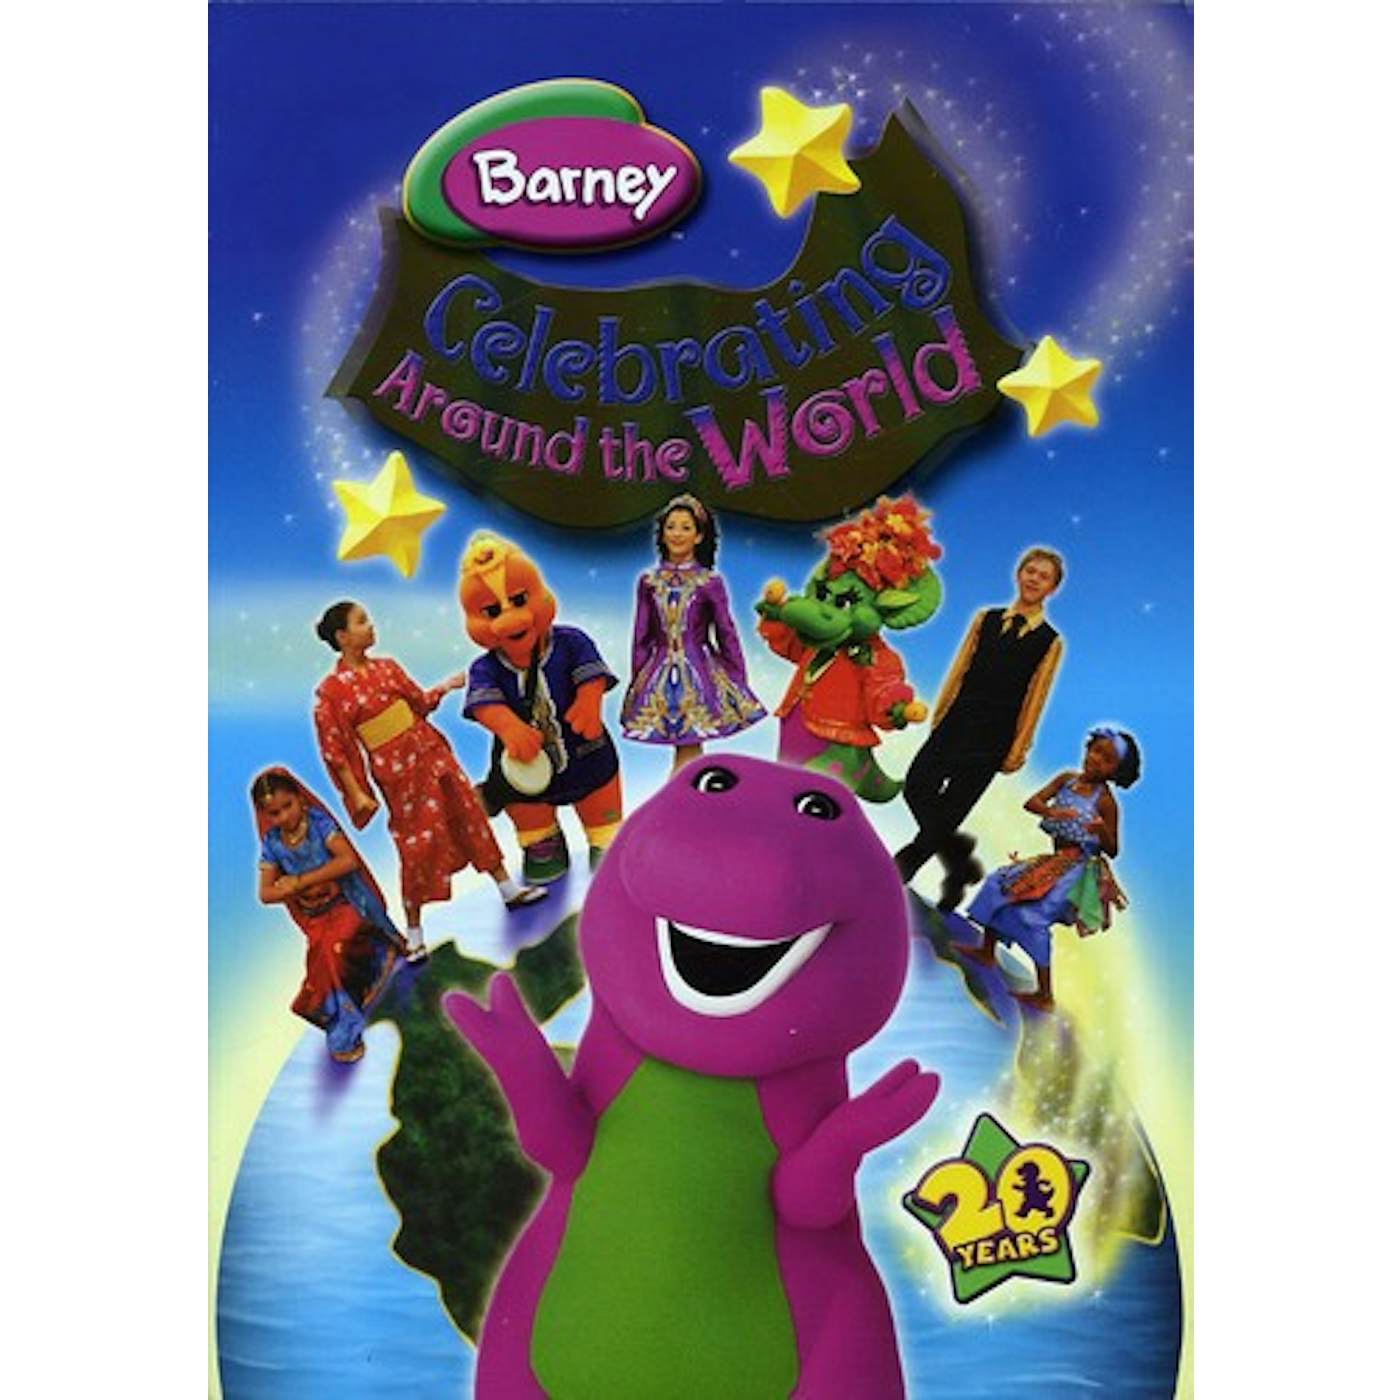 Barney CELEBRATING AROUND THE WORLD DVD